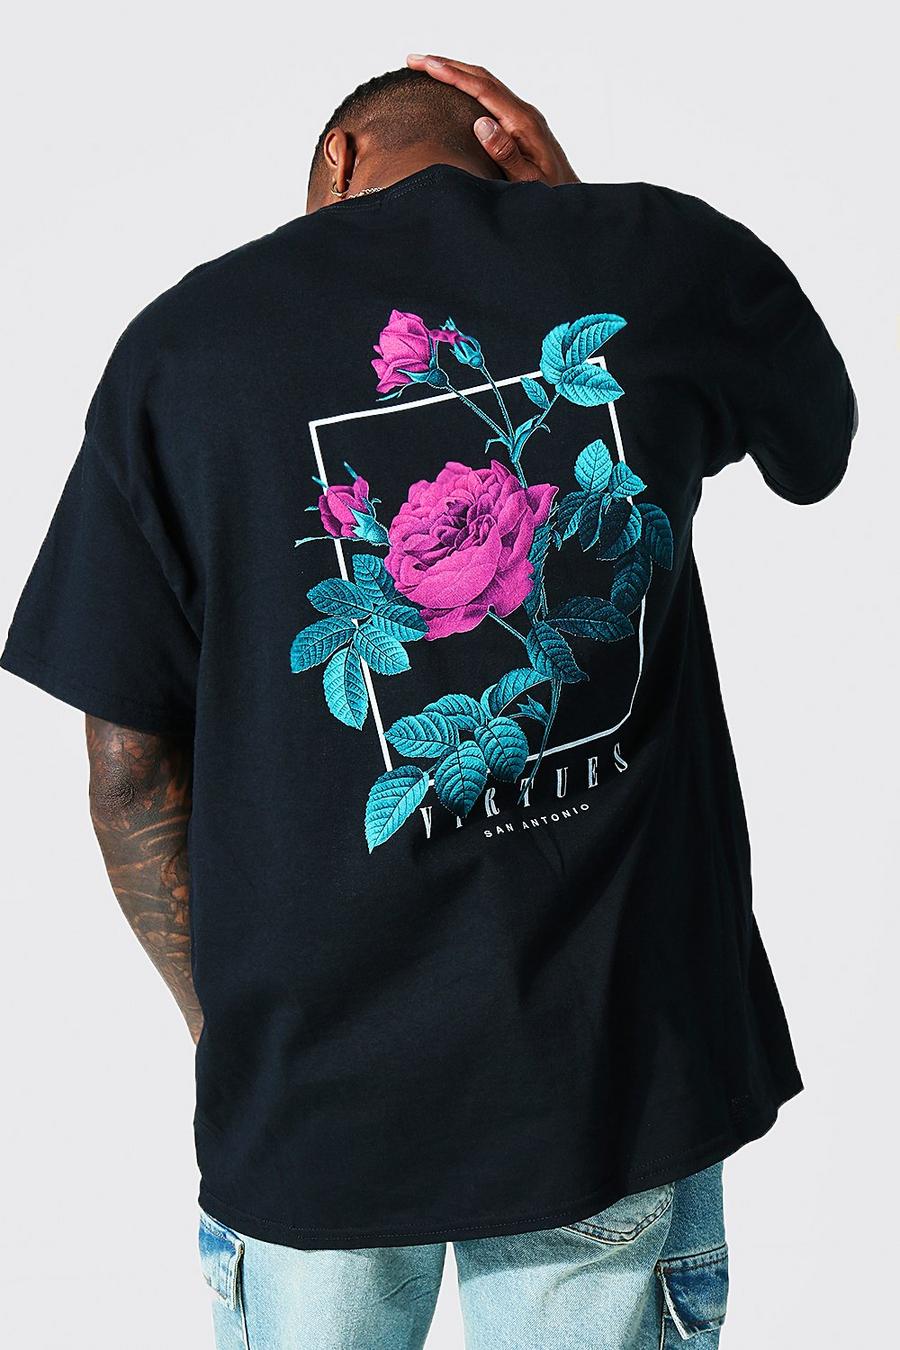 T-shirt oversize con grafica Virtues, Black negro